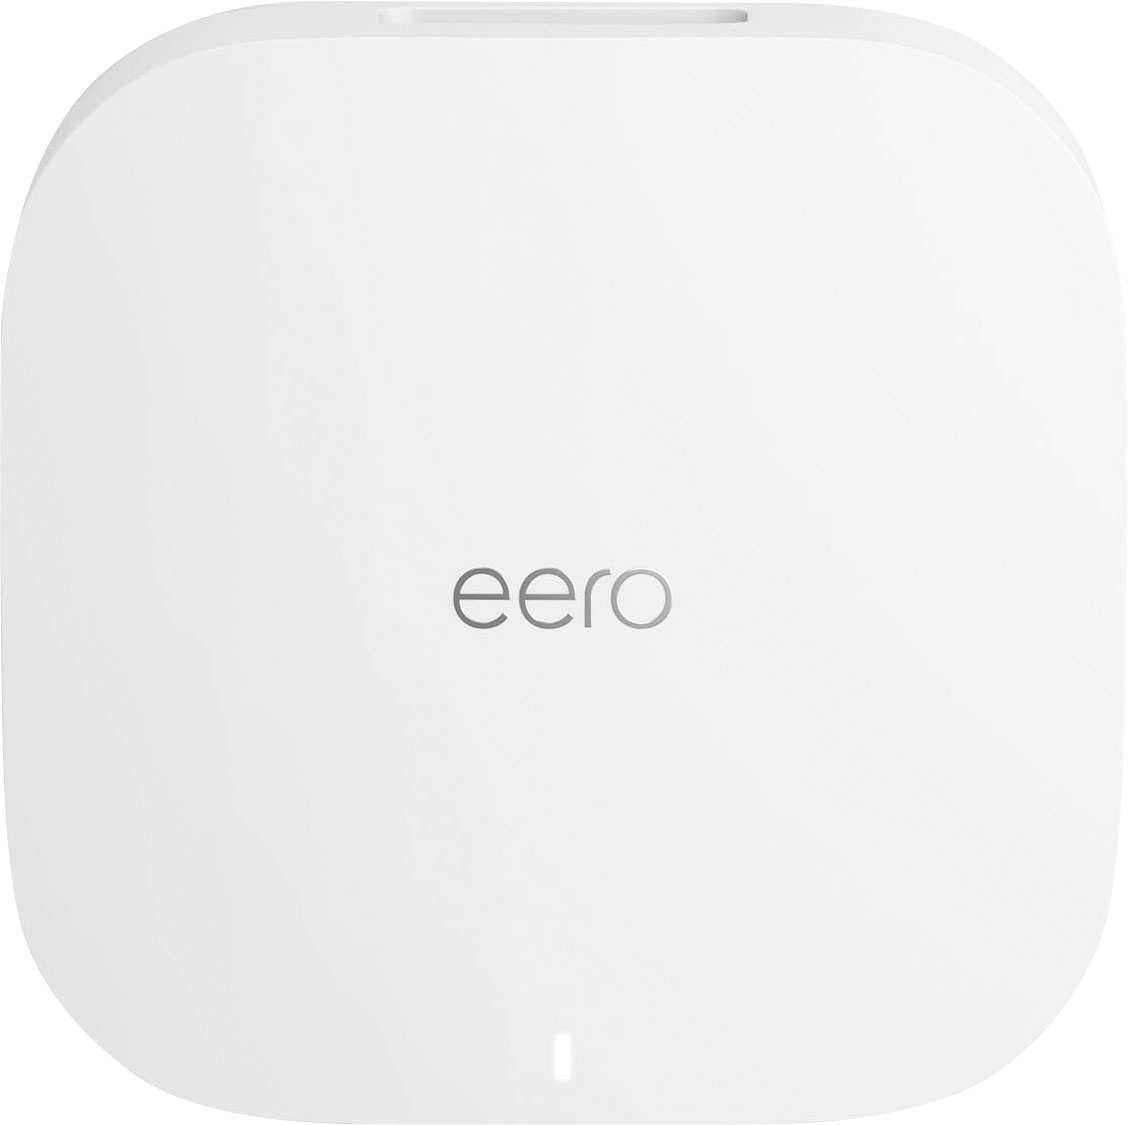 Certified Refurbished  eero Pro mesh WiFi router